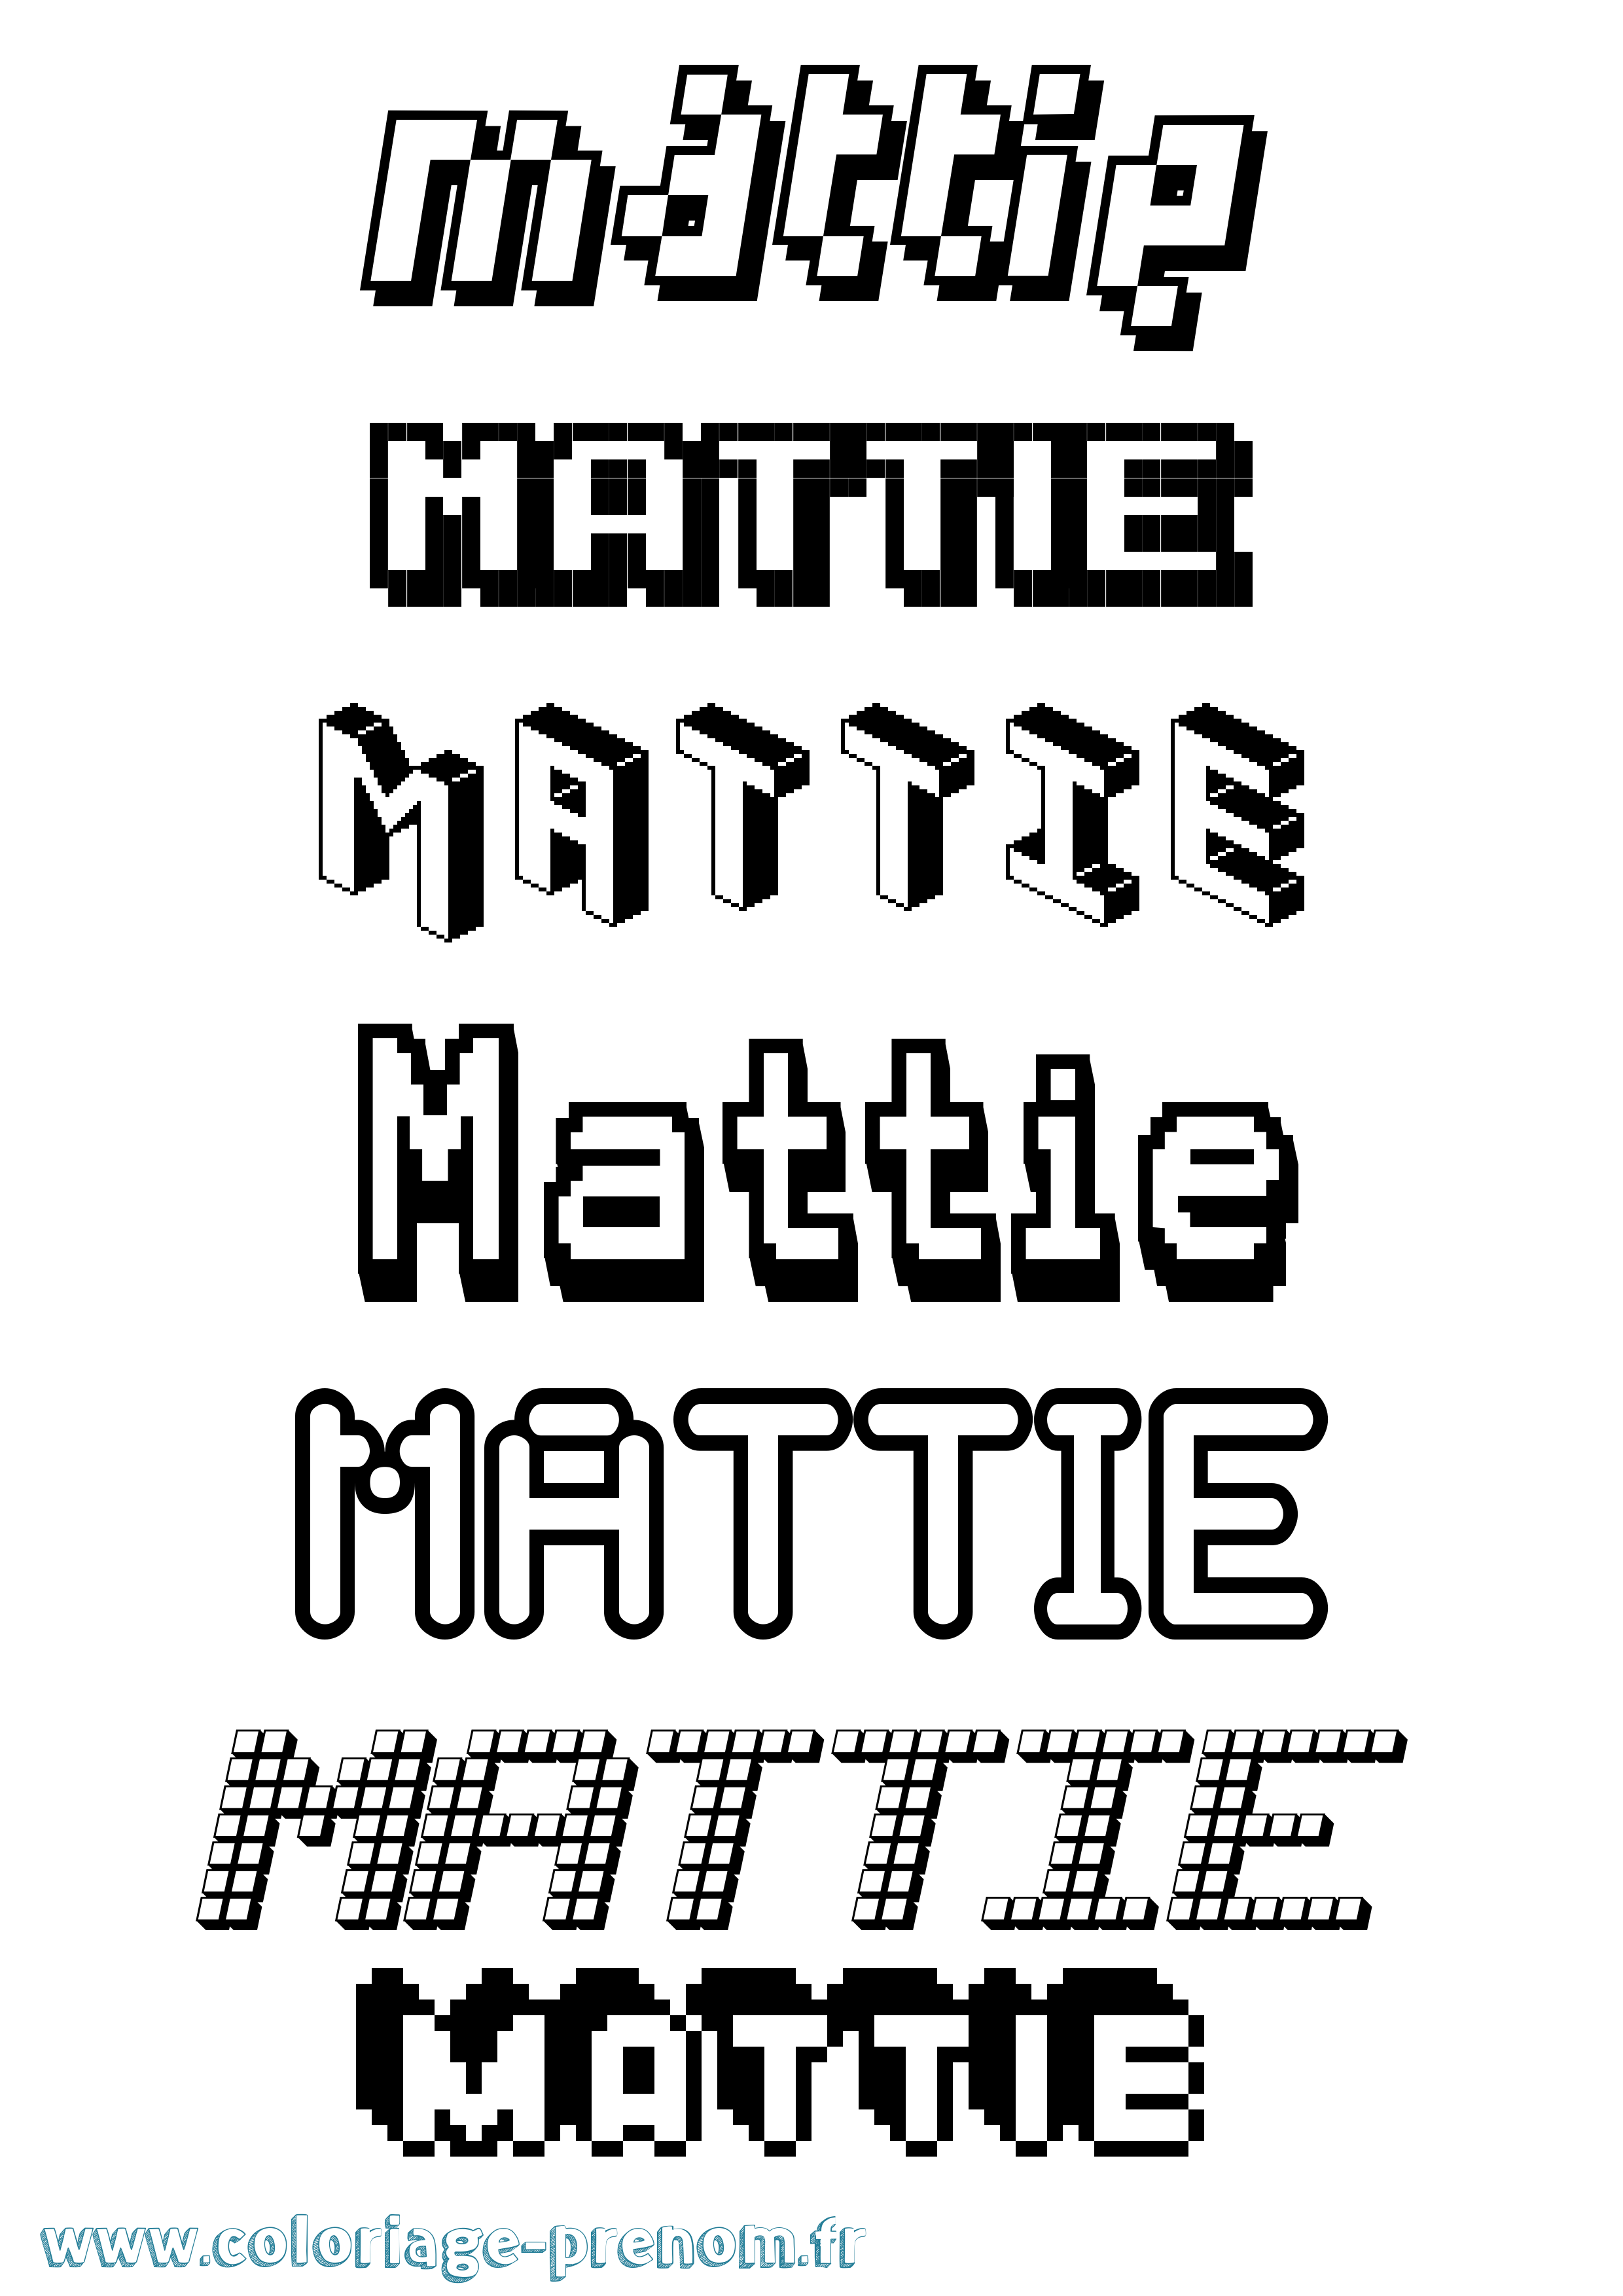 Coloriage prénom Mattie Pixel